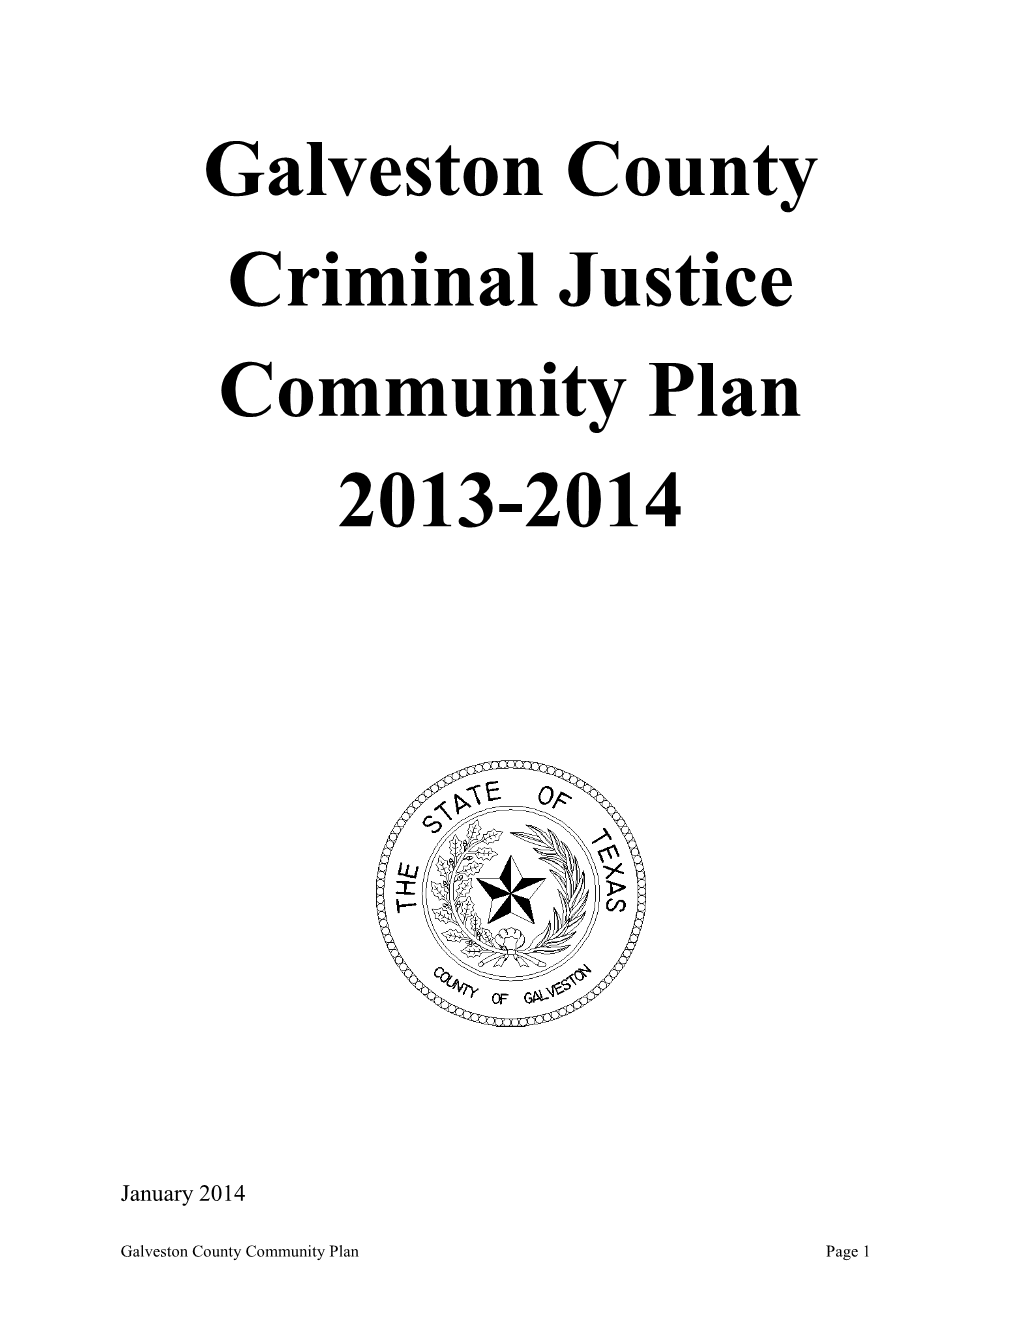 2013-2014 Criminal Justice Community Plan